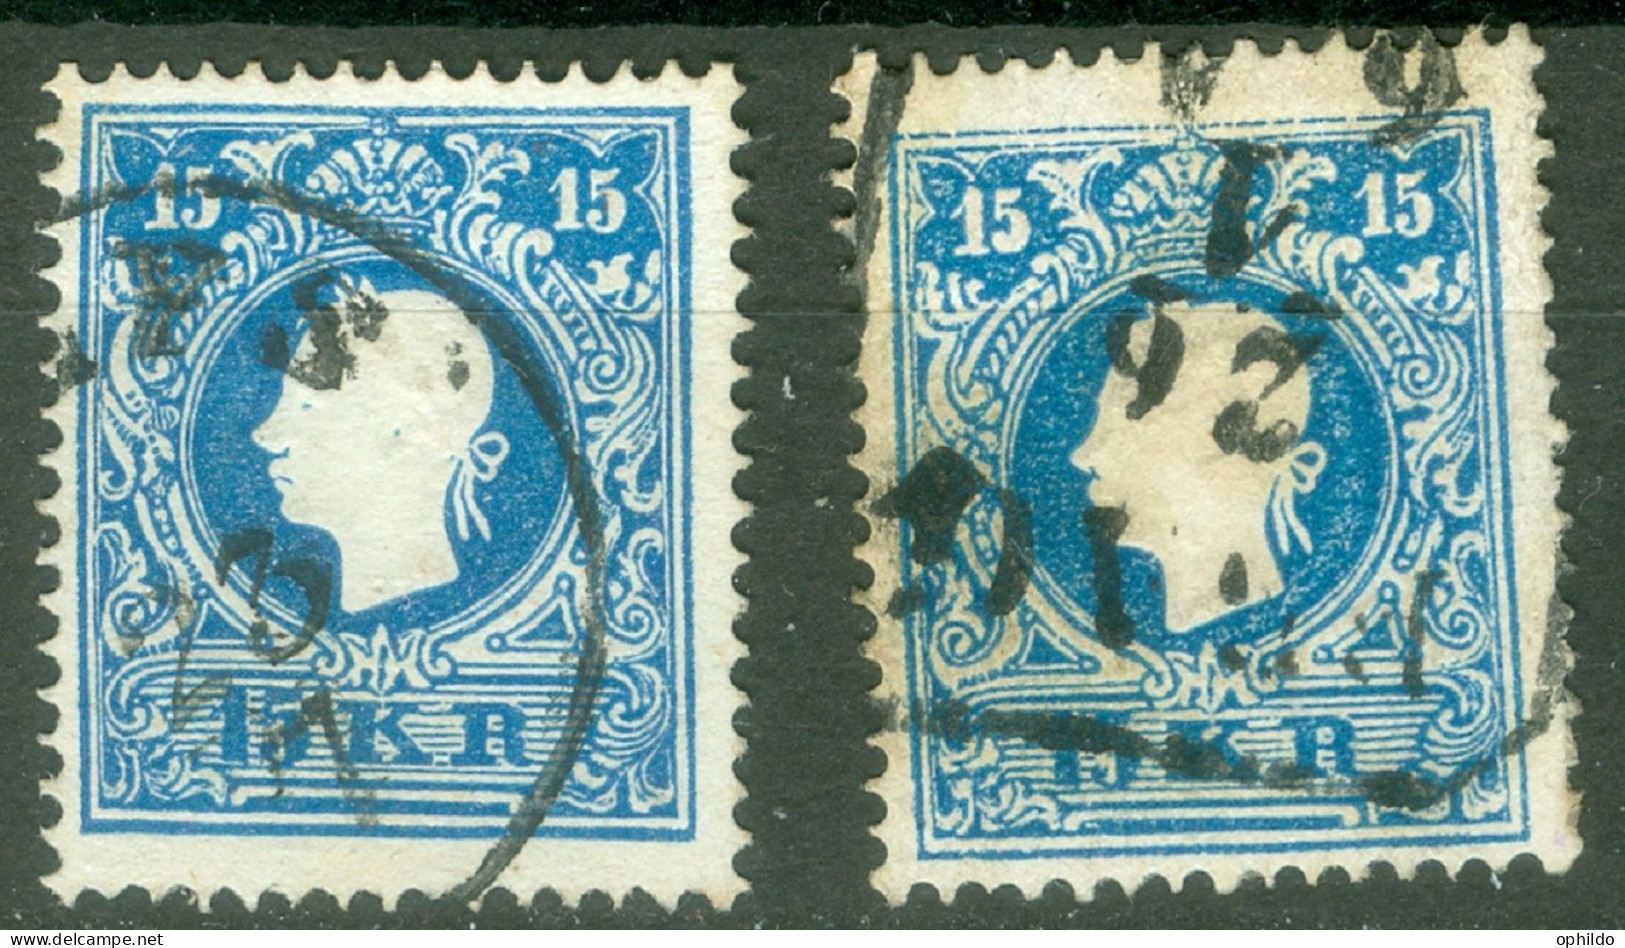 Autriche  Yv 16 Par 2   Ou  ANK 15 II Ob TB  2 Exemplaires  - Used Stamps